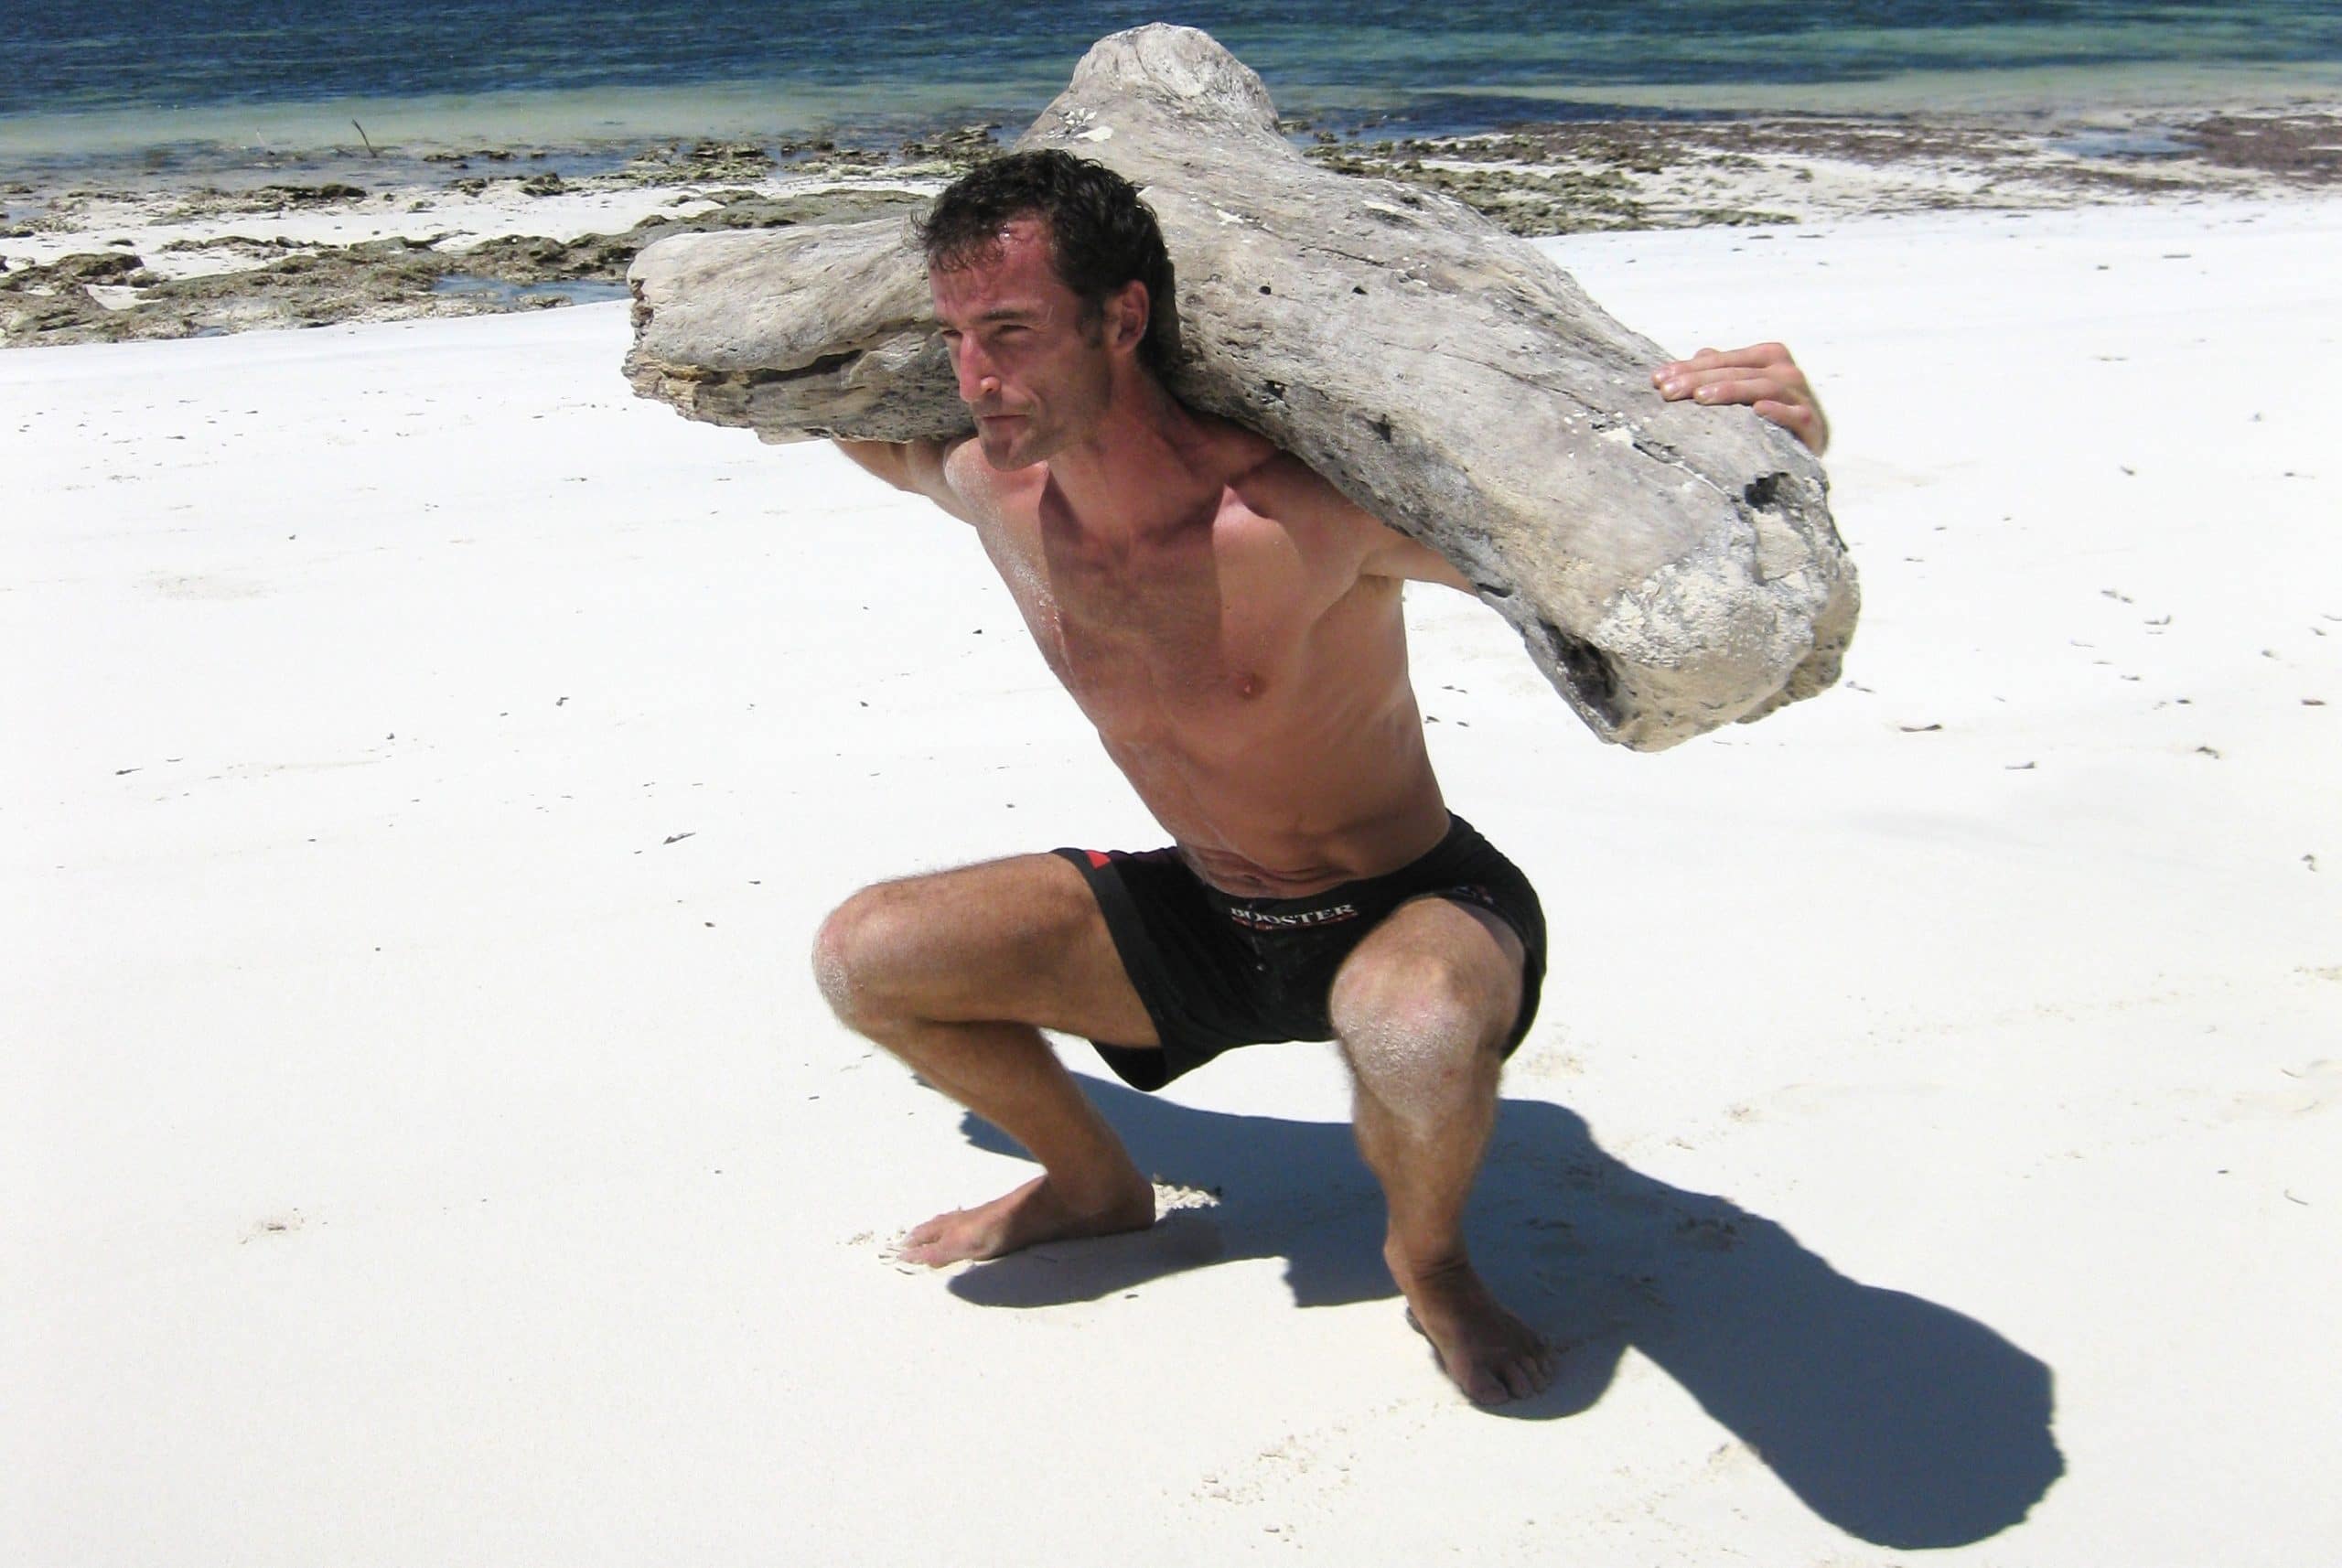 MovNat creator Erwan Le Corre squatting on the beach.